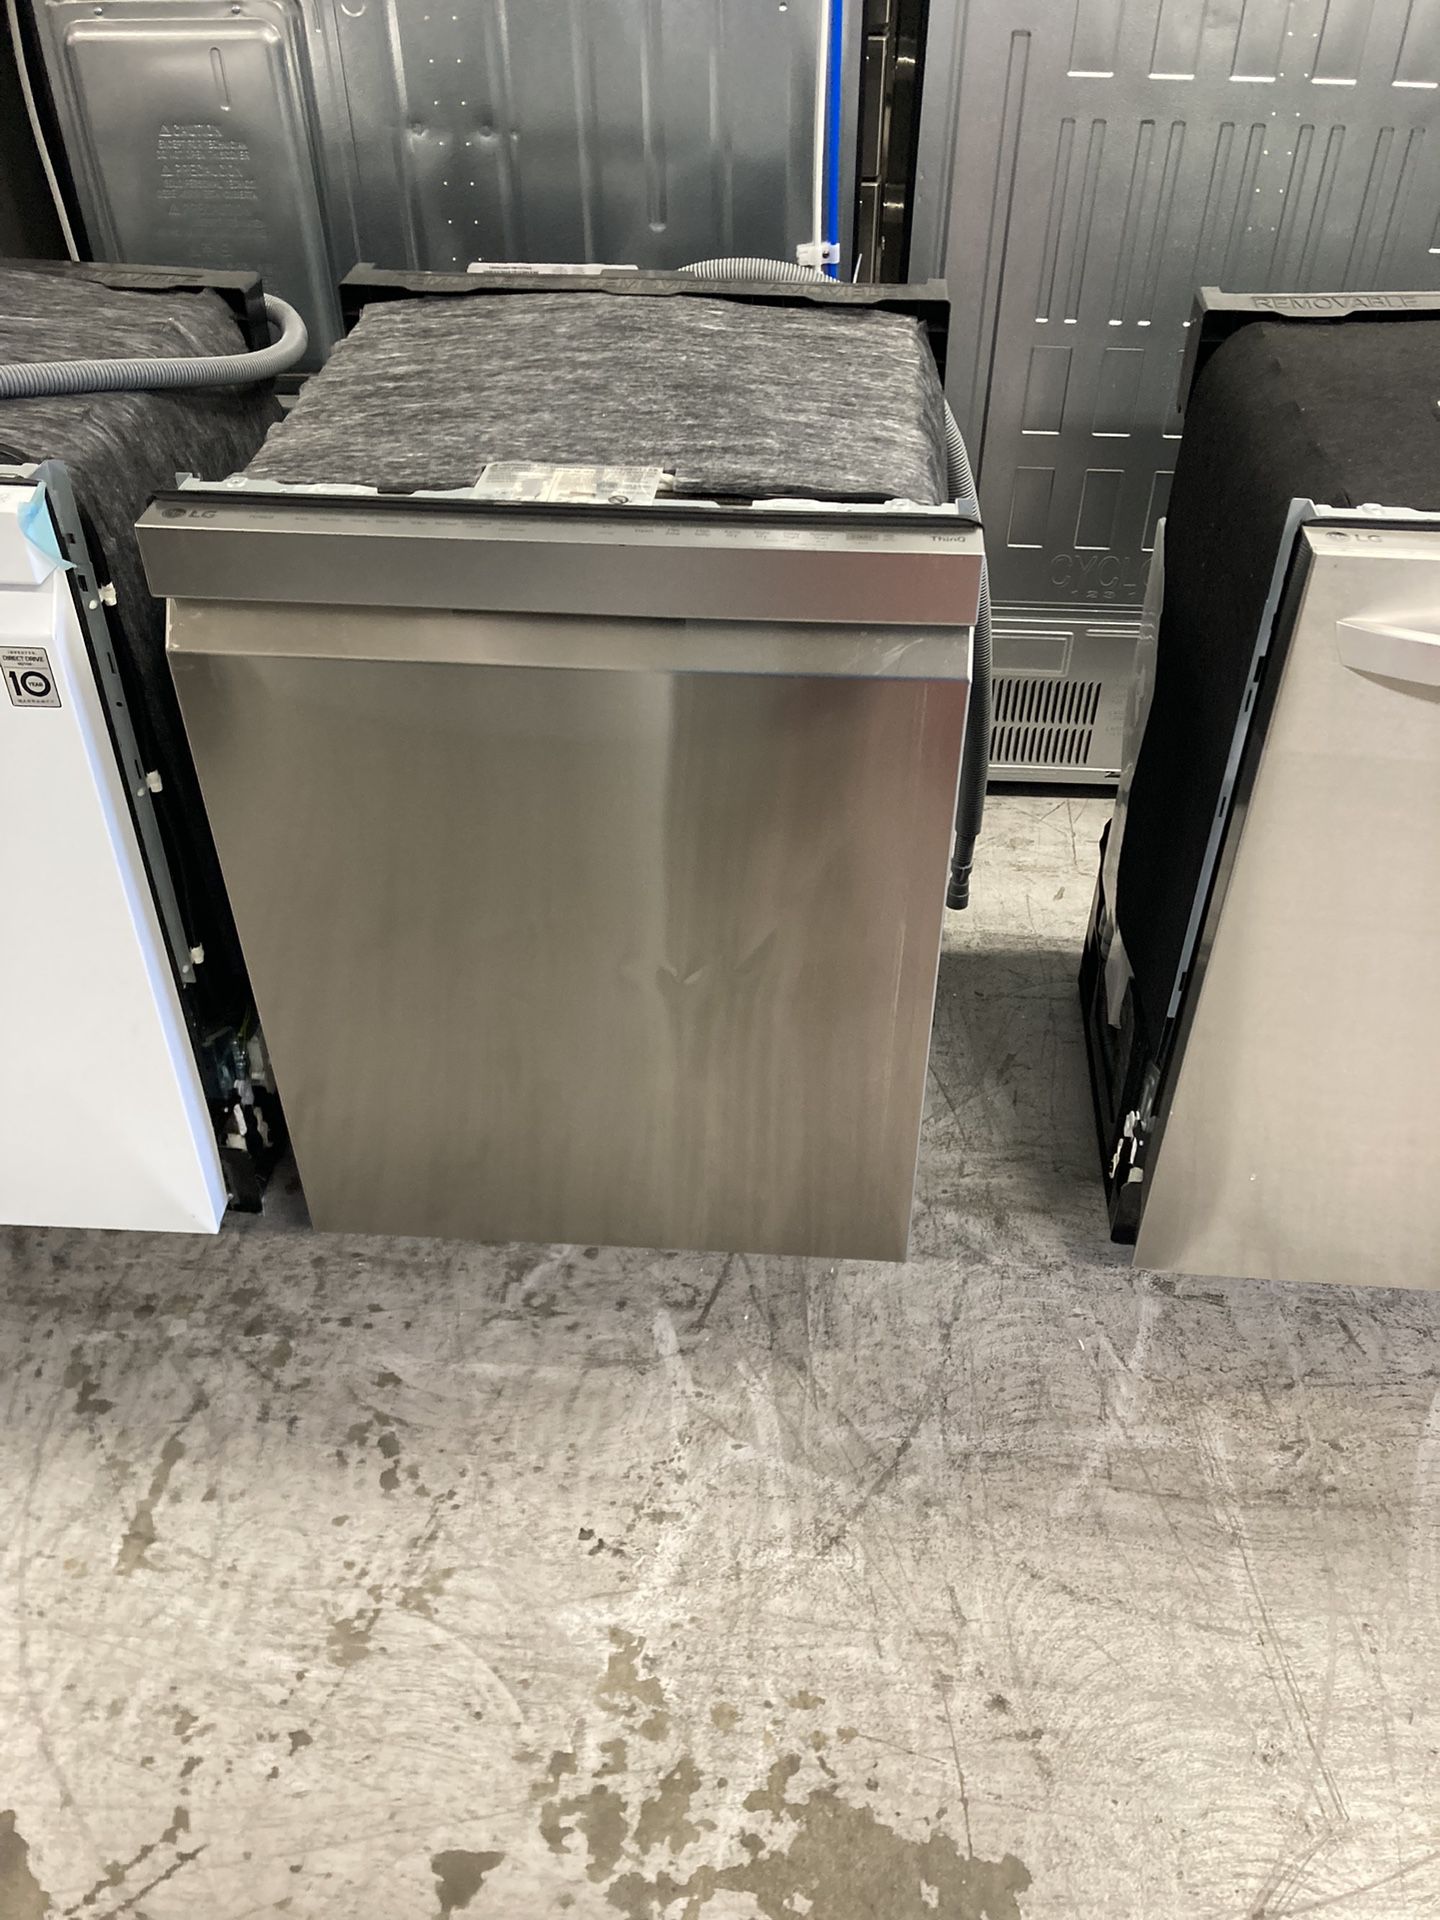 LG Front Control Dishwasher 